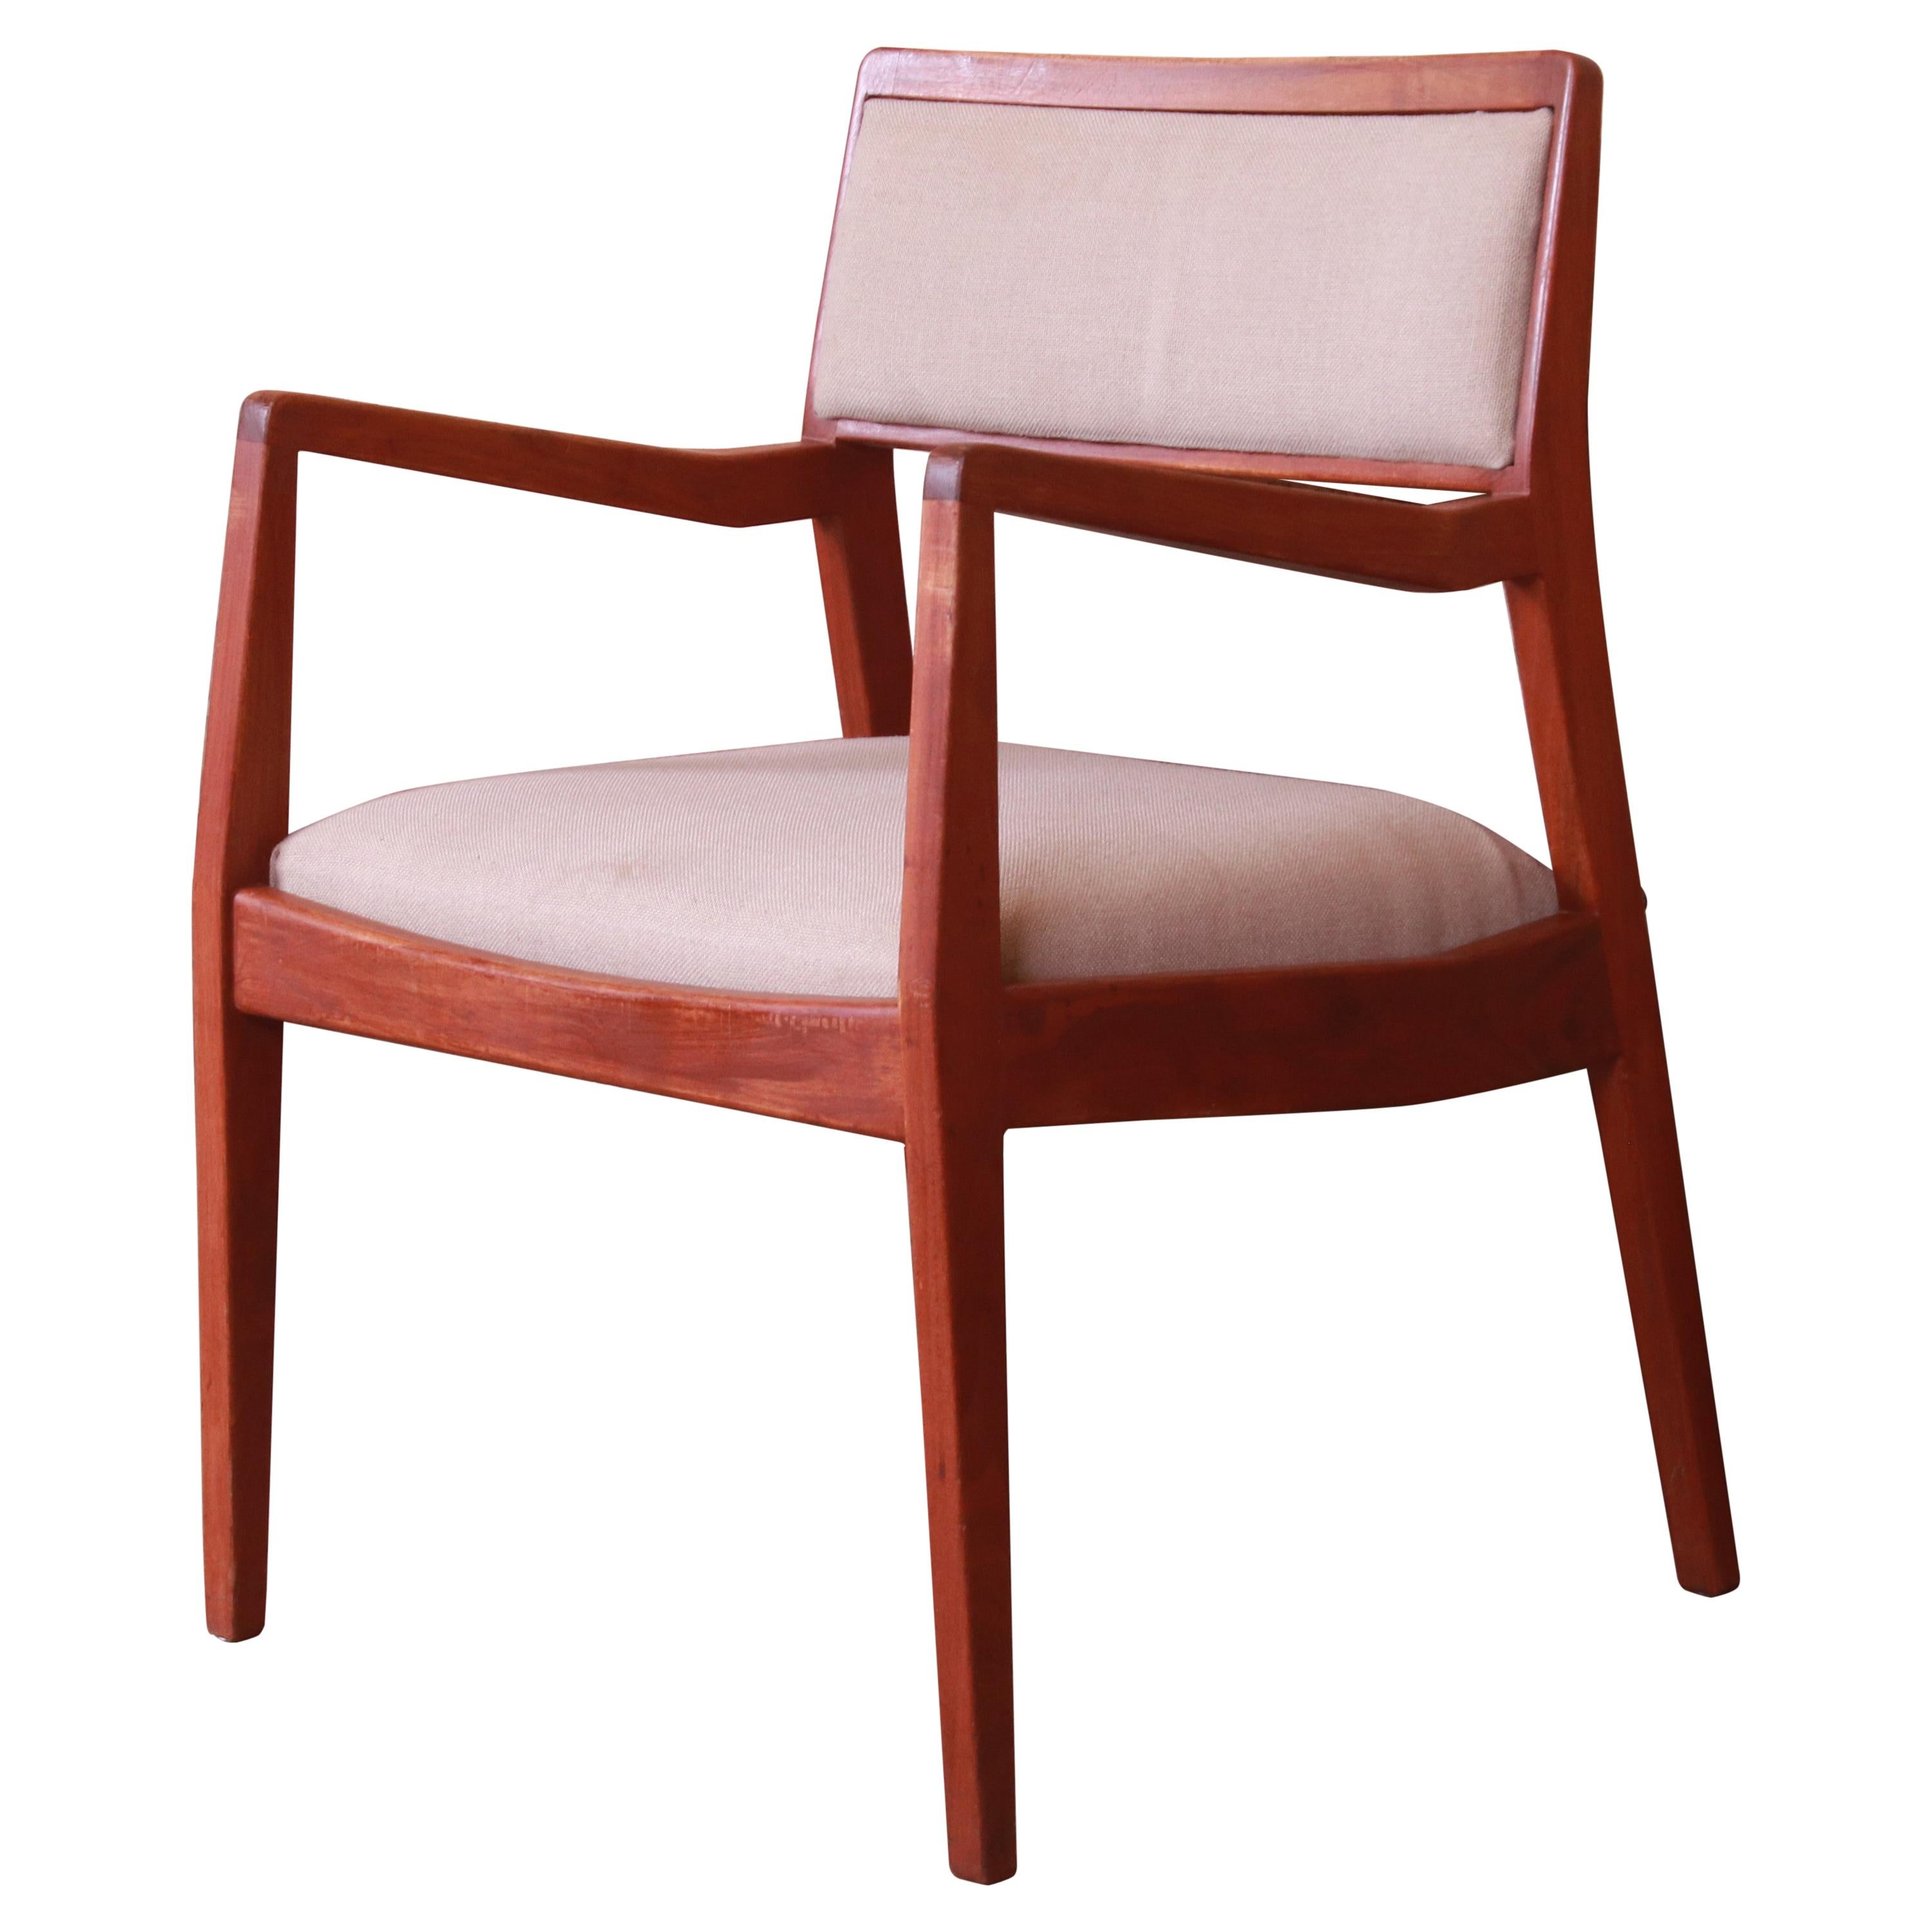 Jens Risom Mid-Century Modern Sculpted Walnut Playboy Lounge Chair, 1960s